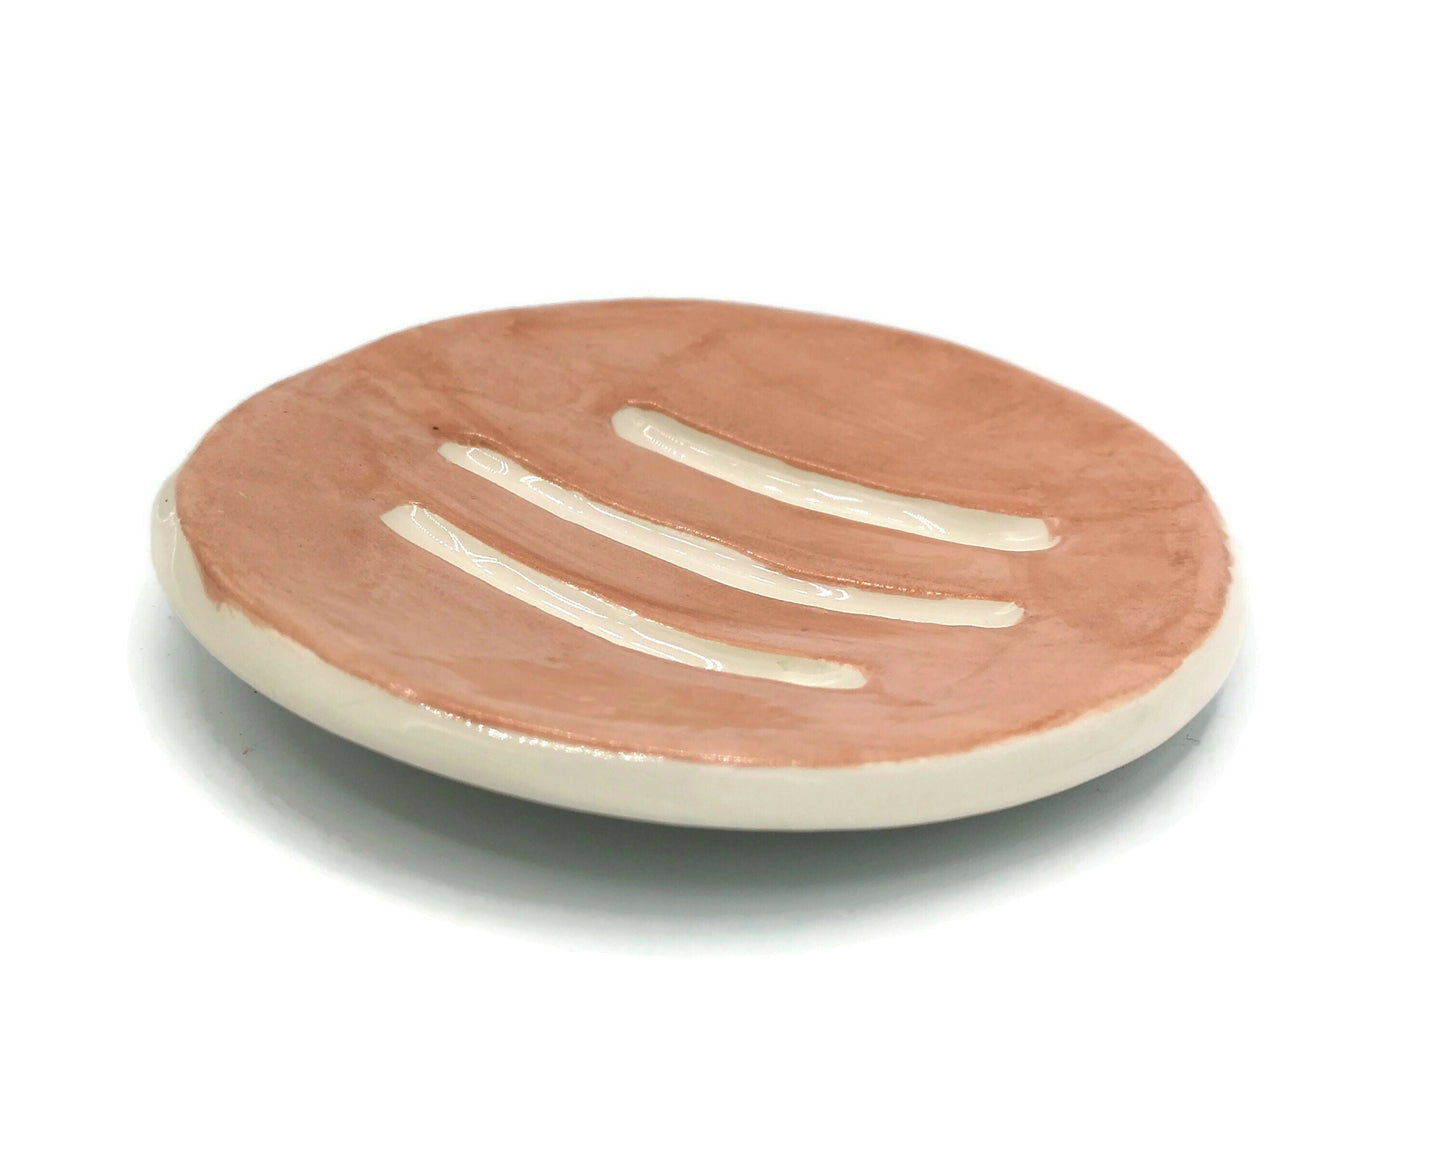 12cm/4.72in Handmade Ceramic Round Pink Soap Bar Holder For Bathroom Decor, Clay Soap Dish Drain, Eco Friendly Zero Waste Pottery Soap Tray - Ceramica Ana Rafael